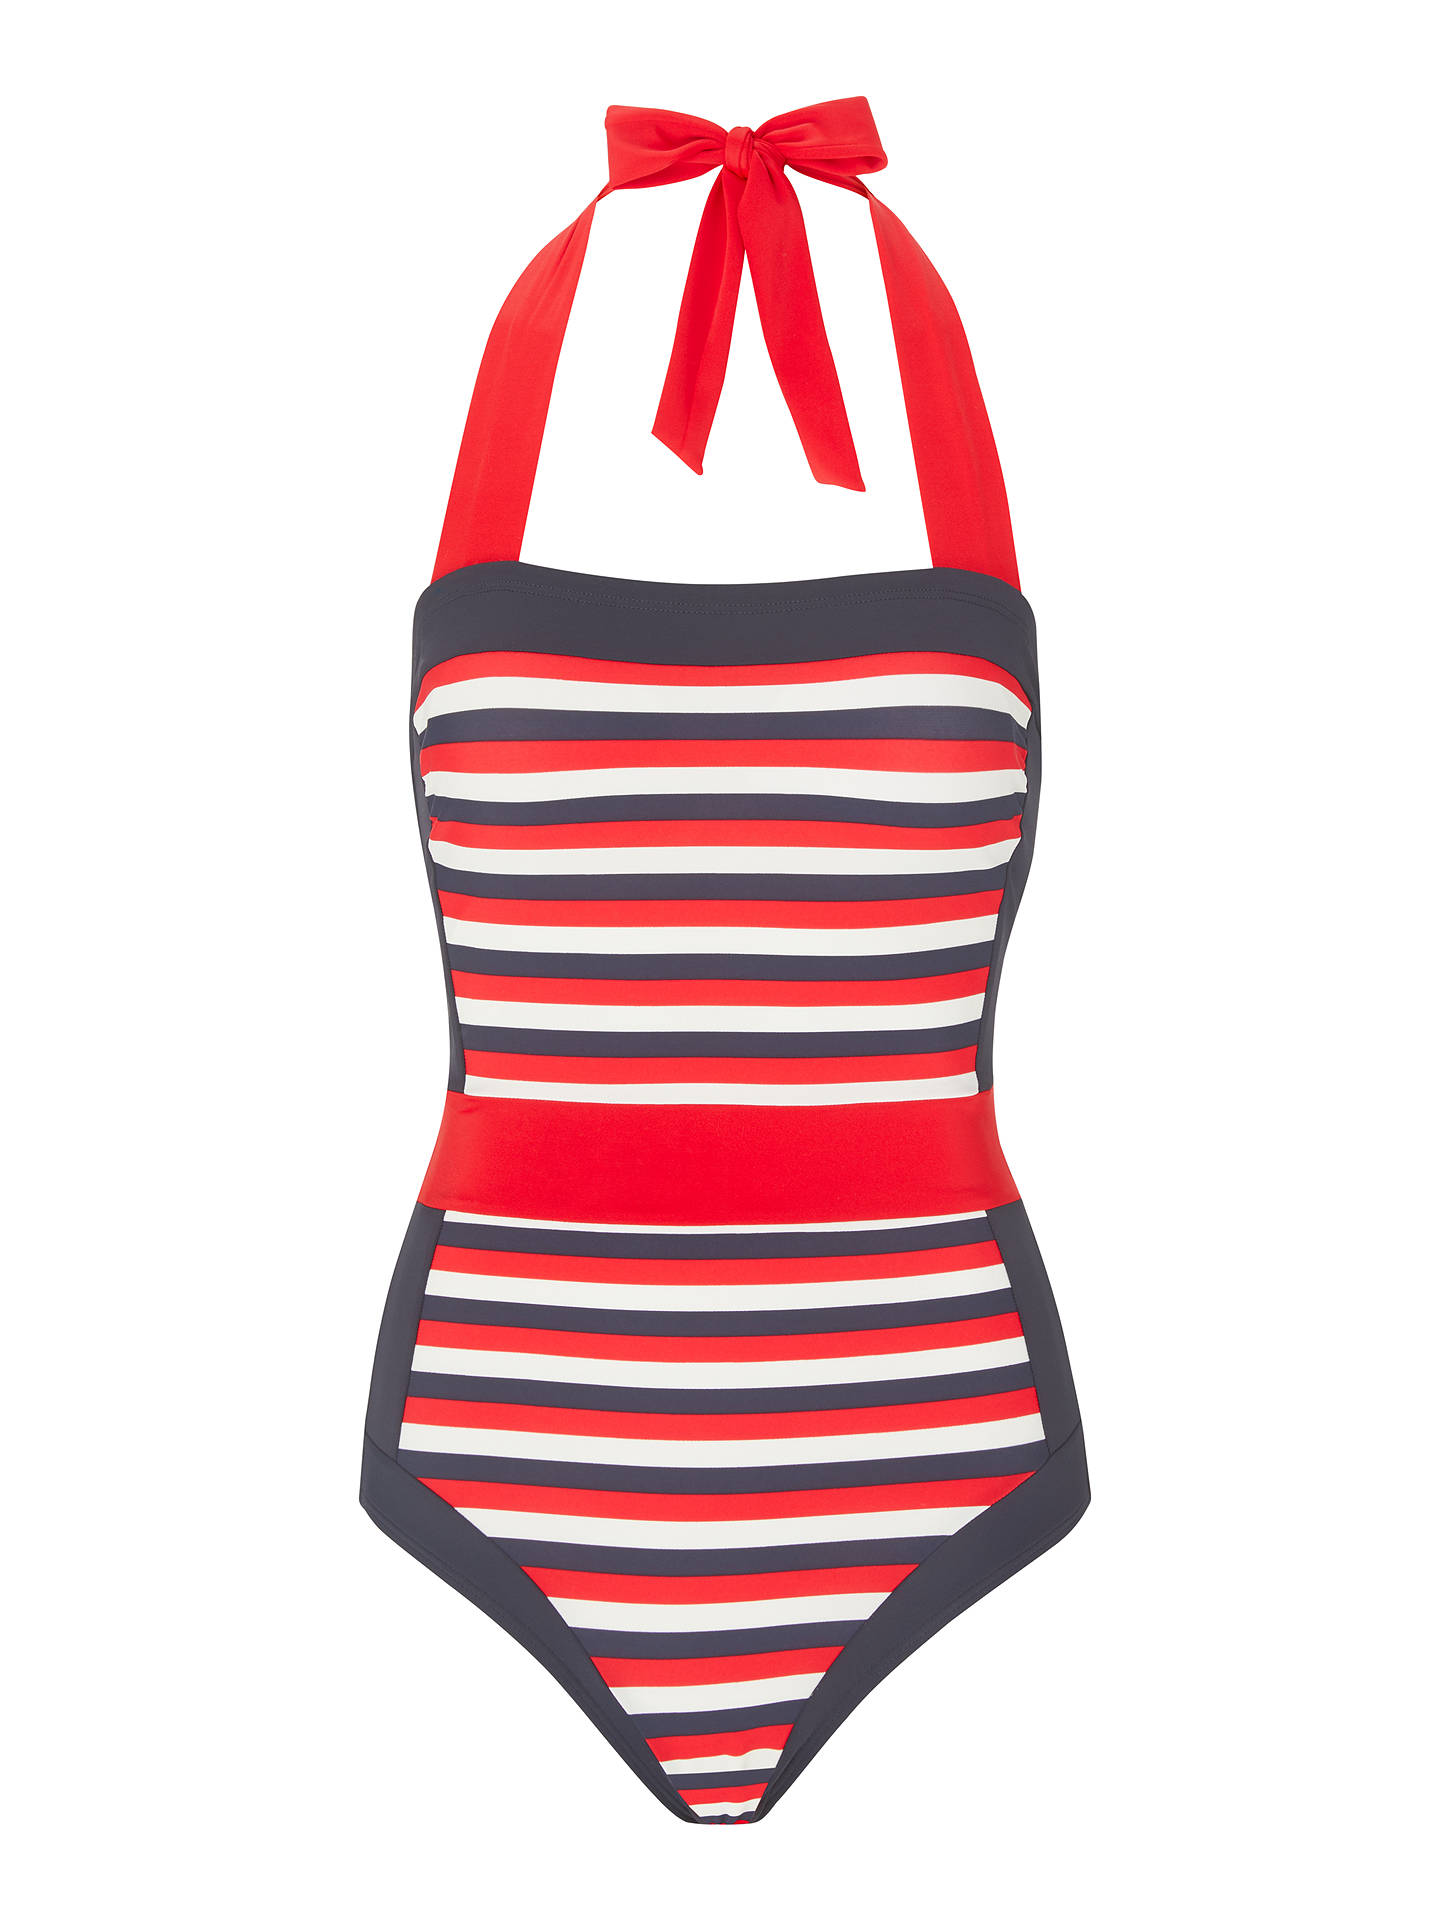 Boden Santorini Swimsuit, Red/Navy at John Lewis & Partners